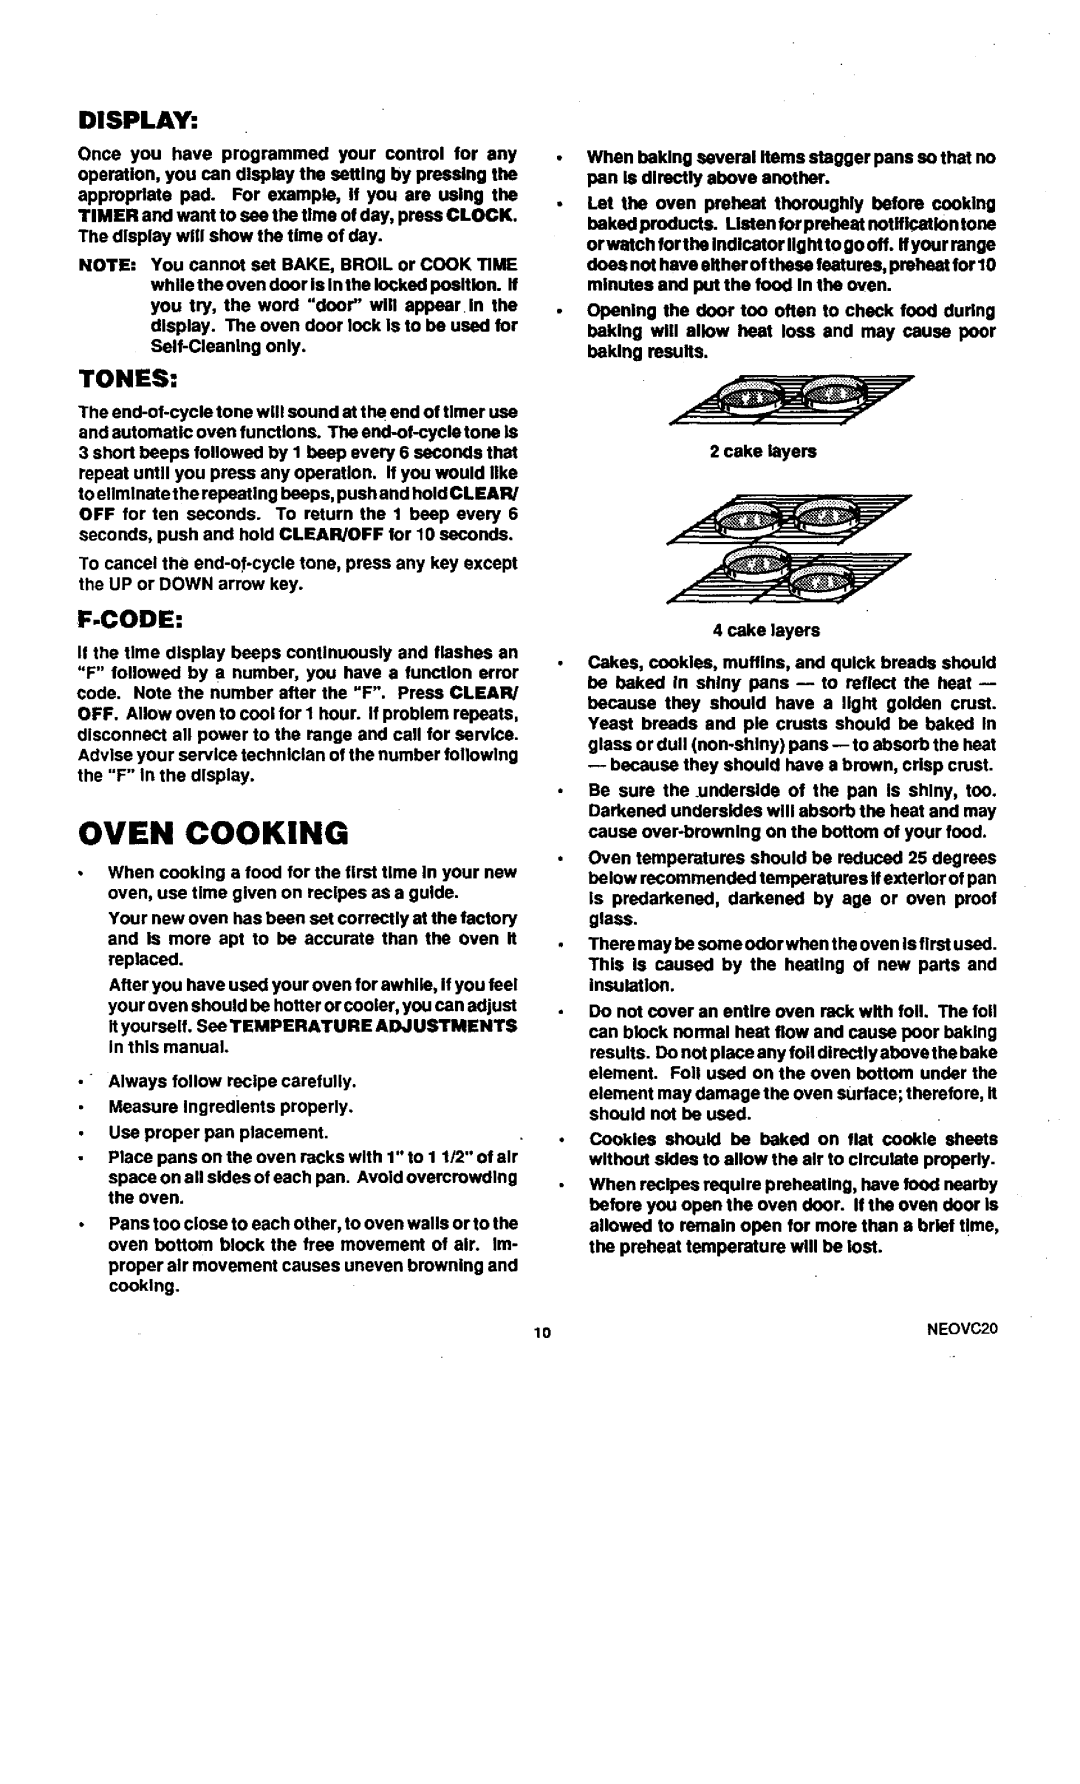 Sears 45520, 45521 warranty Oven Cooking, Display, Tones, F-Code 